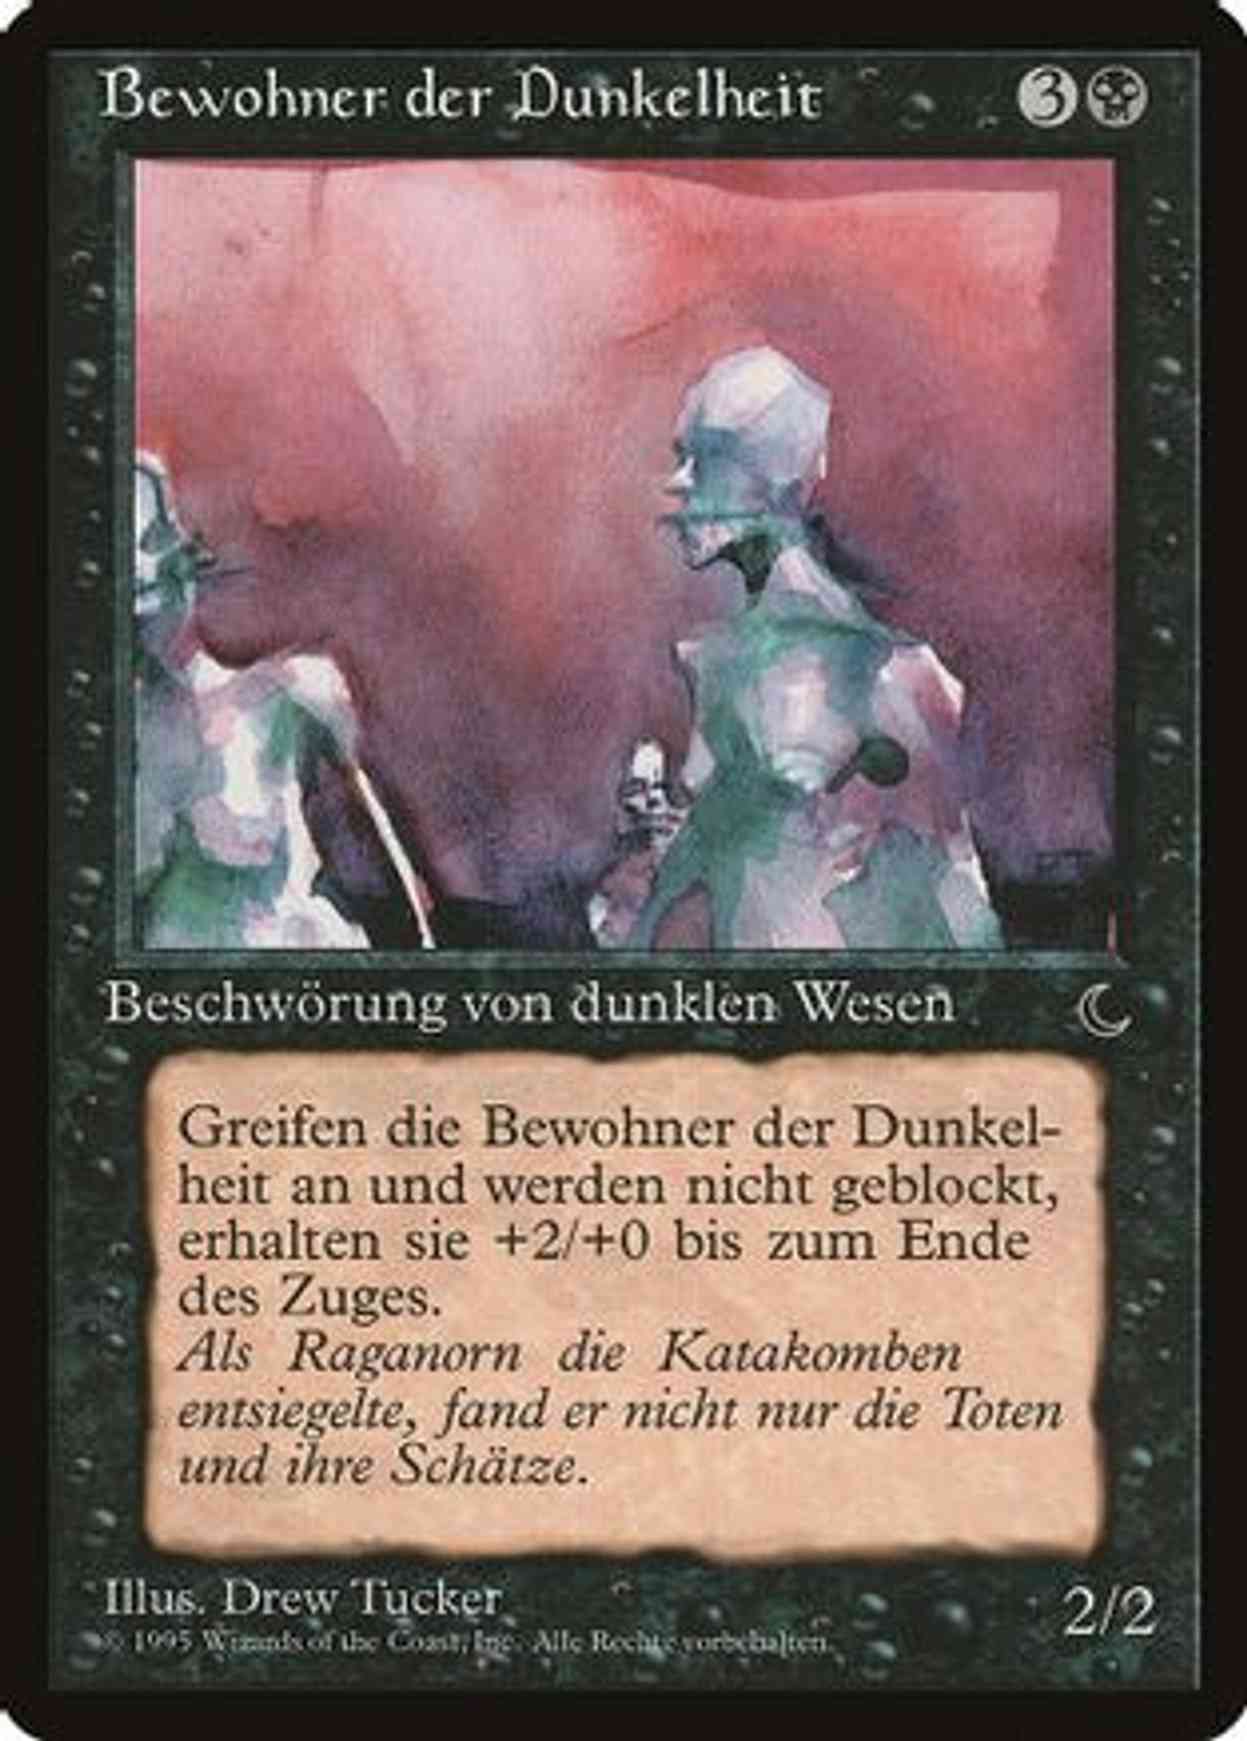 Murk Dwellers (German) - "Bewohner der Dunkelheit" magic card front